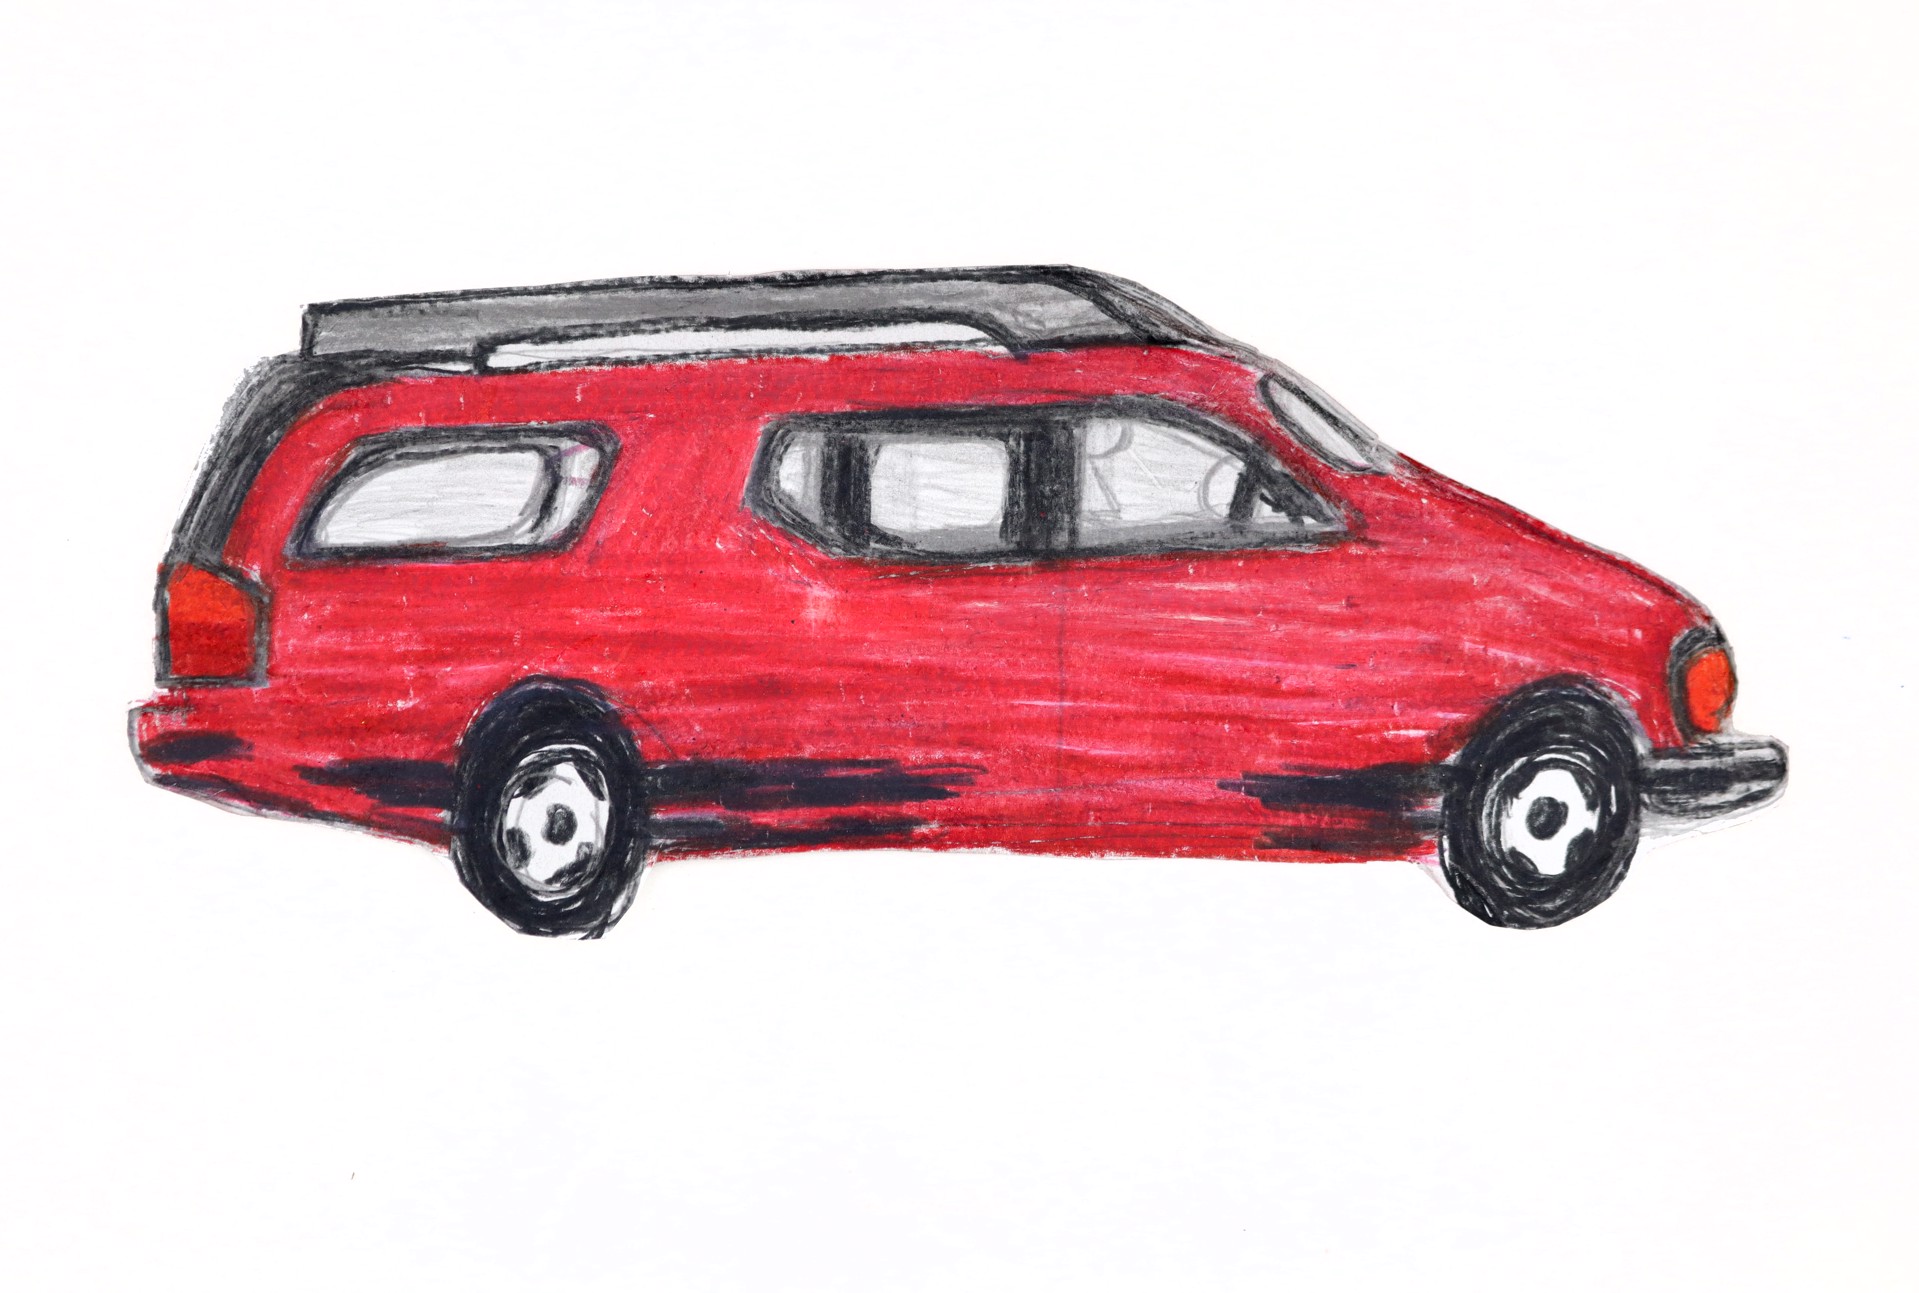 Red Car by Michael Haynes